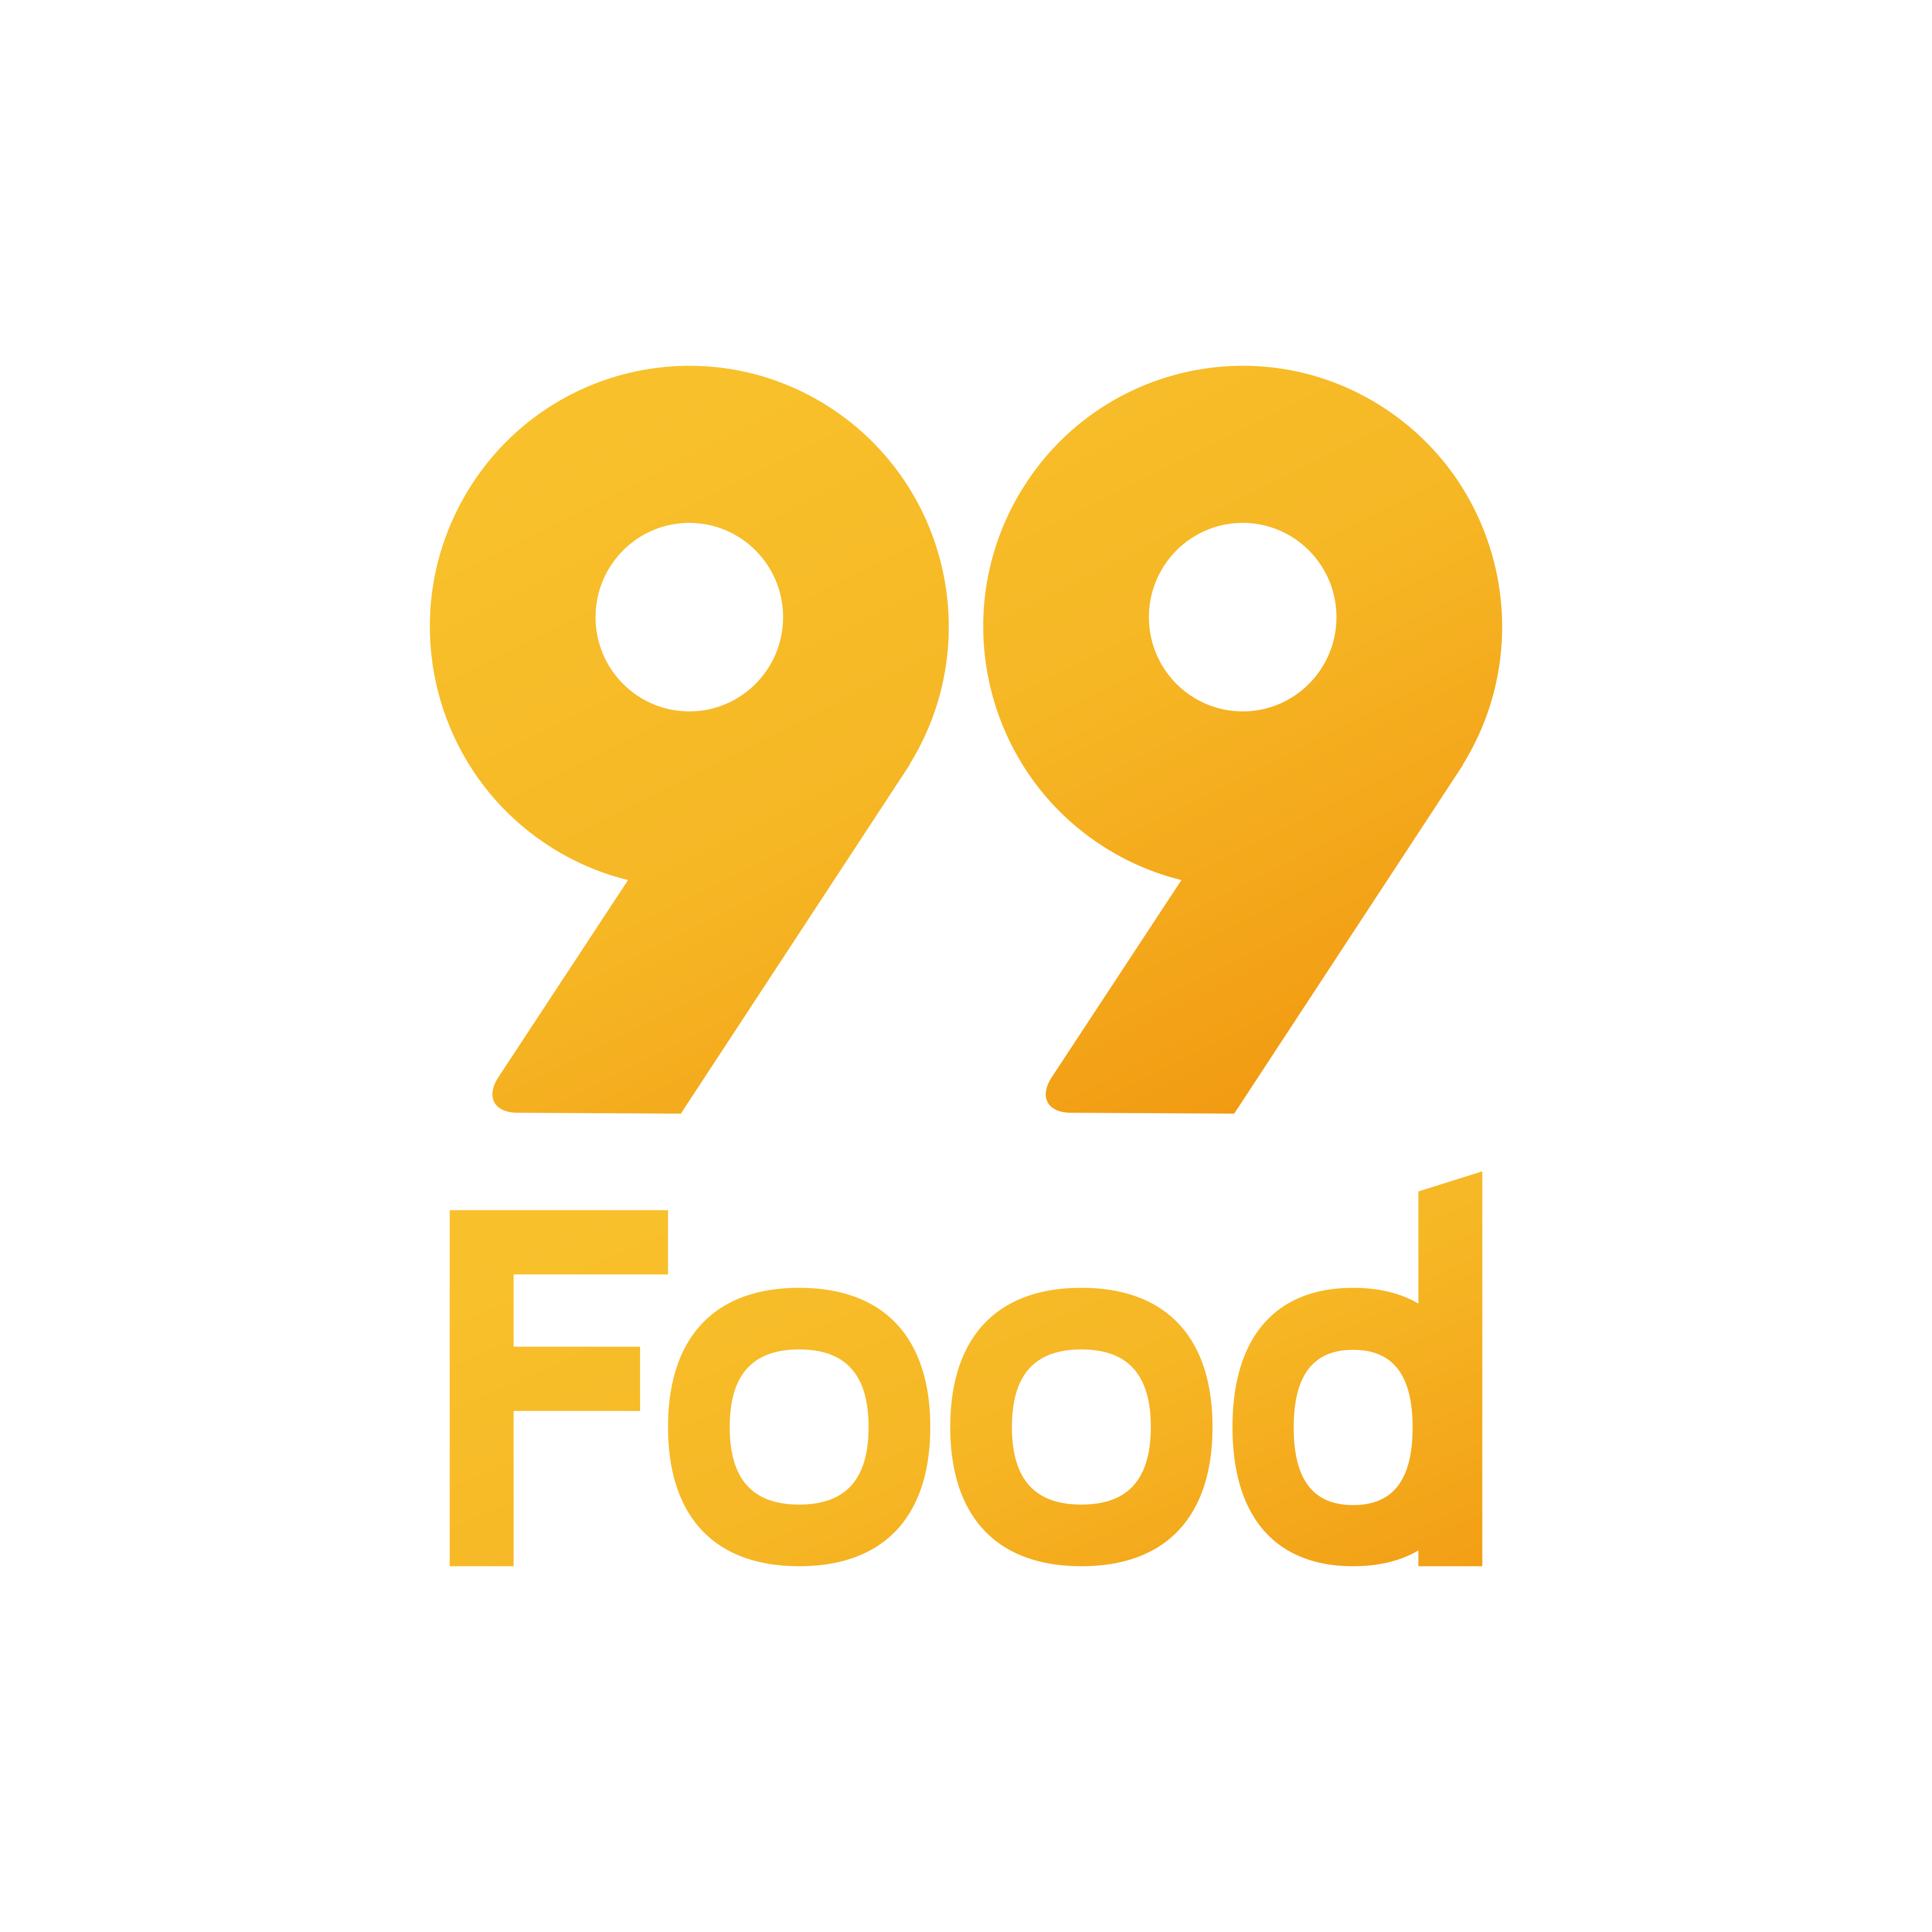 99 Food logo - PNG e Vetor - Download de Logo